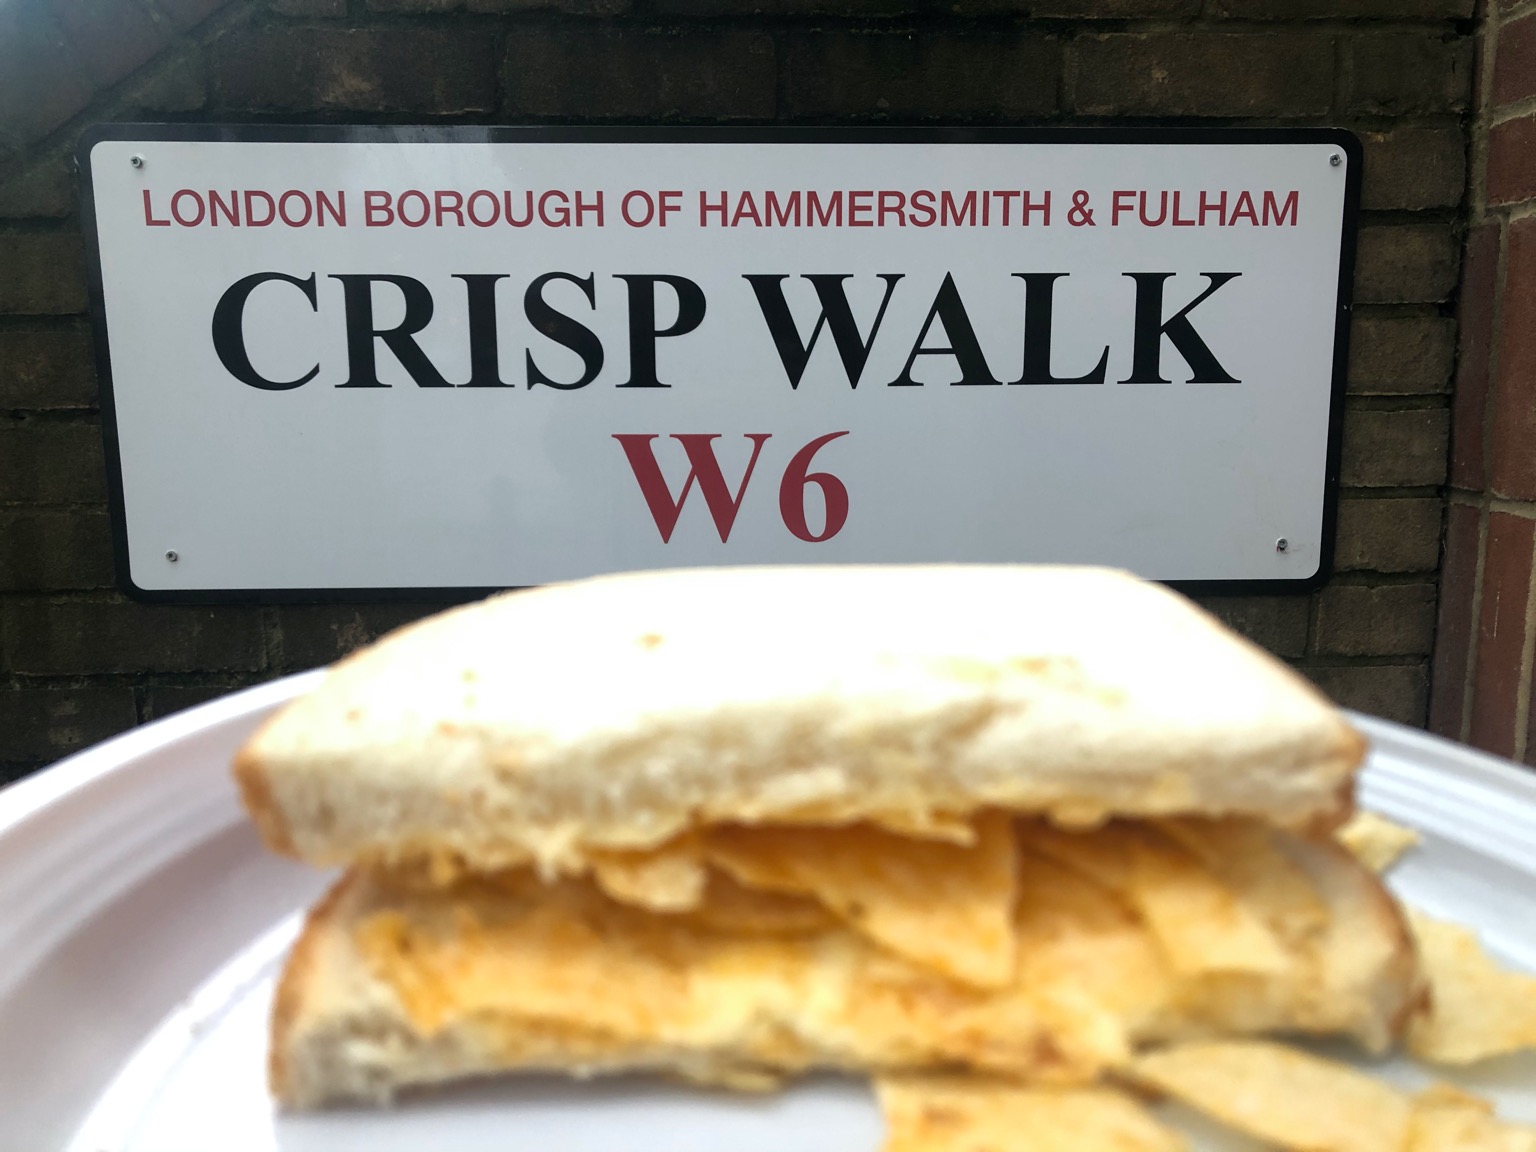 Half of a crisp sandwich in front of Crisp Walk sign